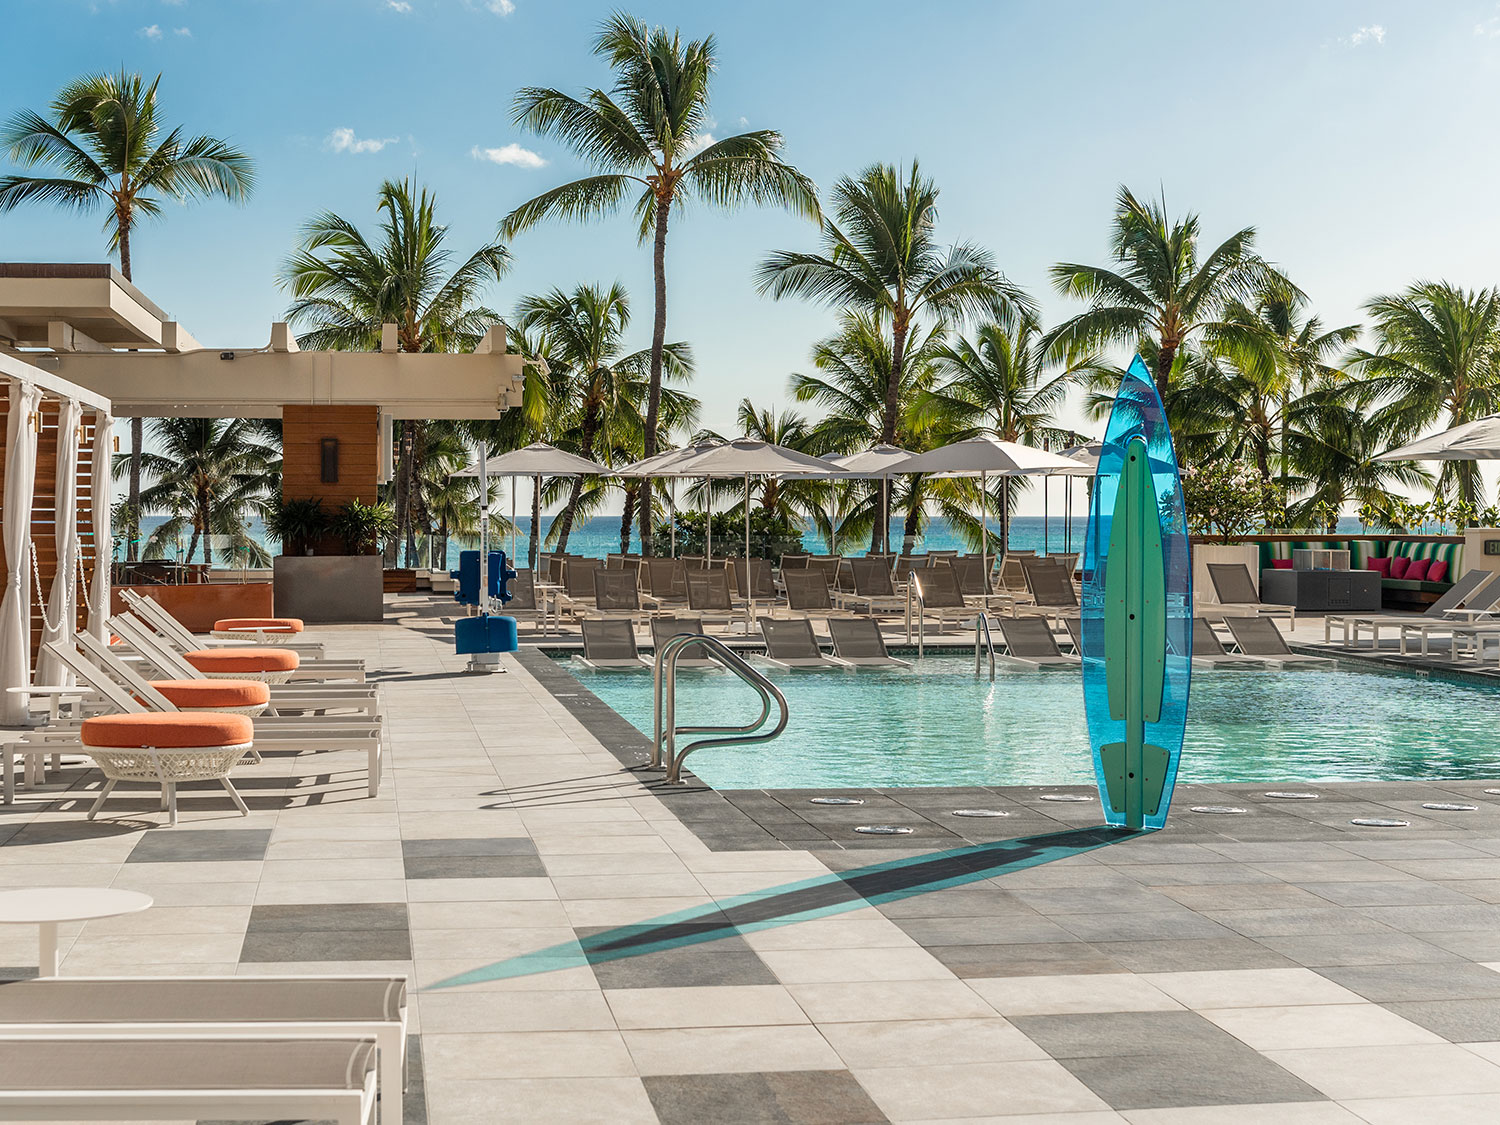 The pool at Waikiki Beach Marriott Resort & Spa in Hawaii.